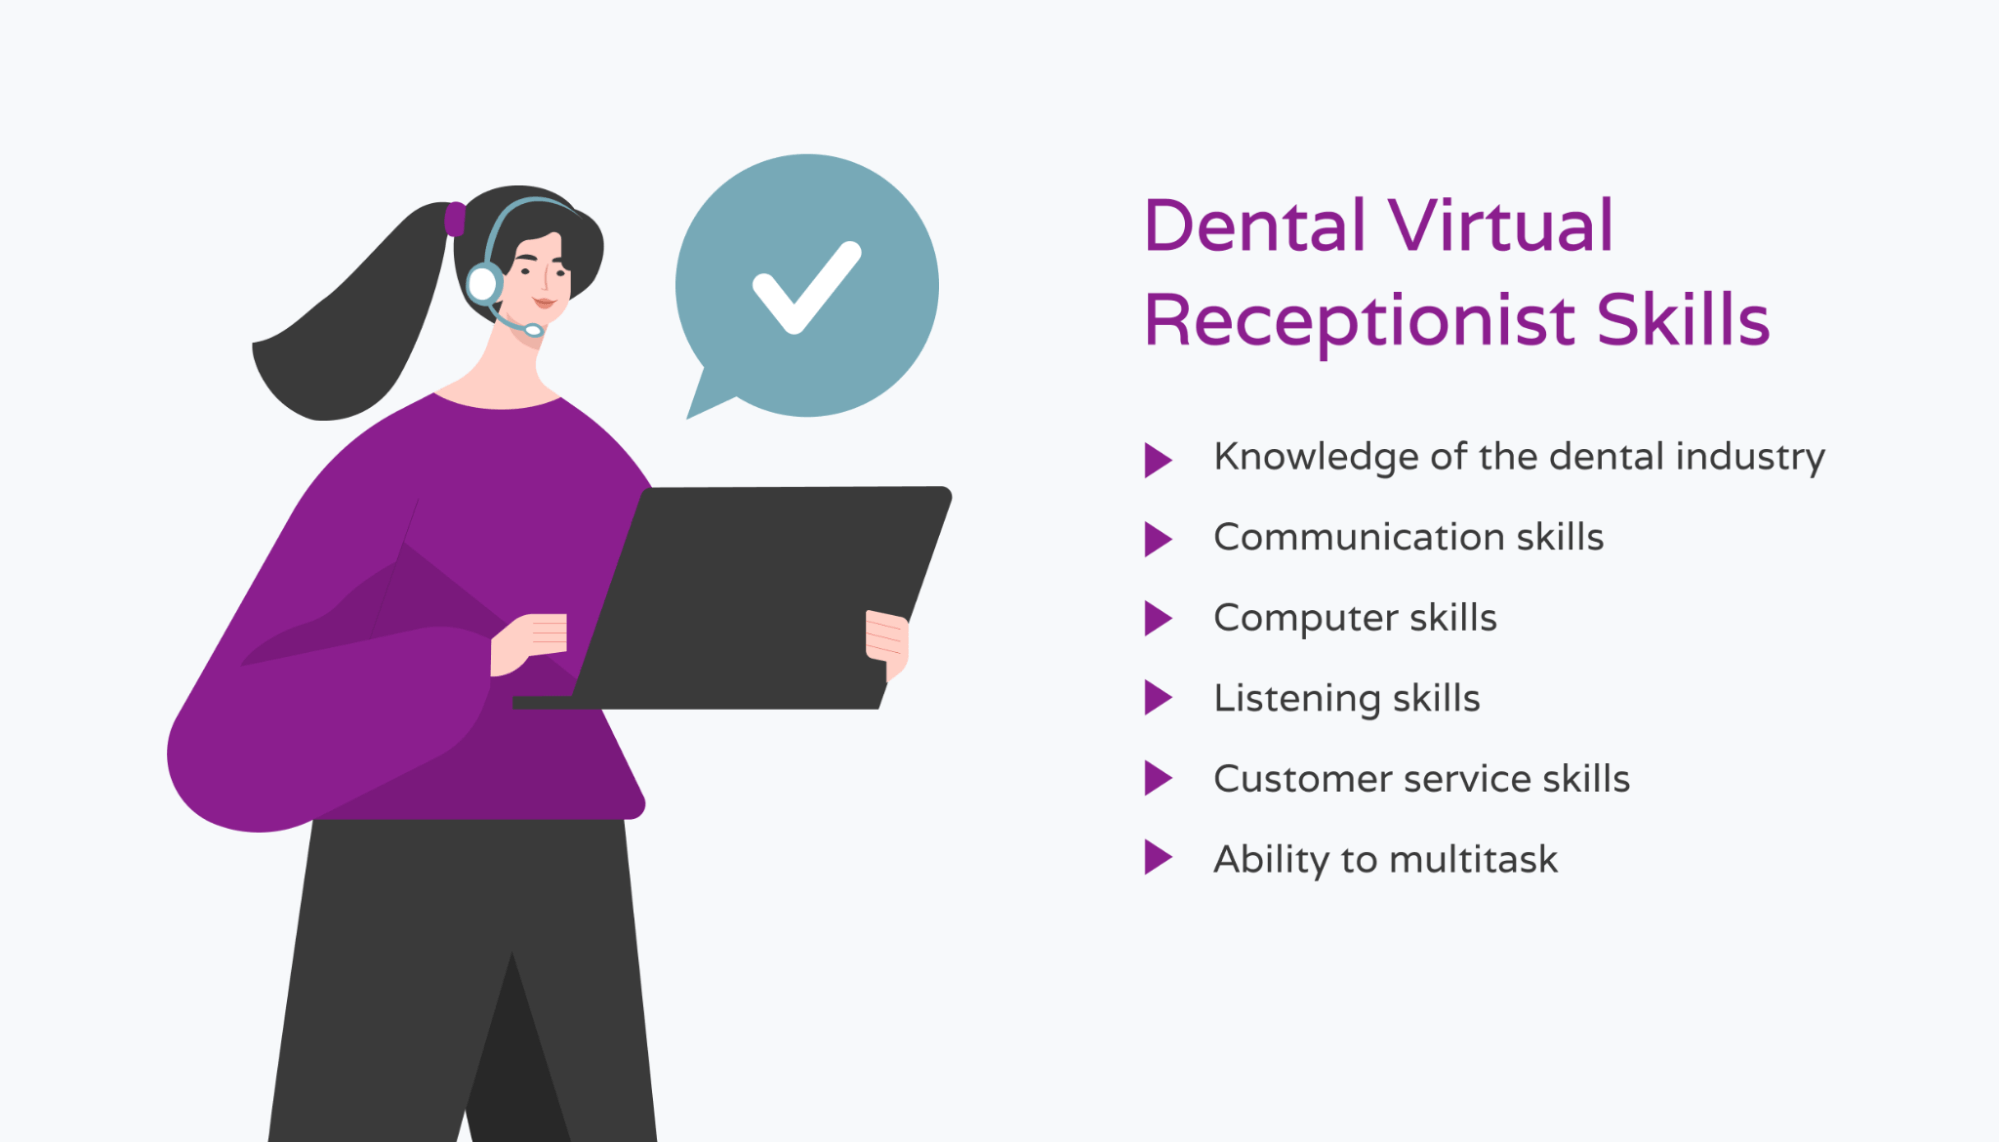 List of dental virtual receptionist skills